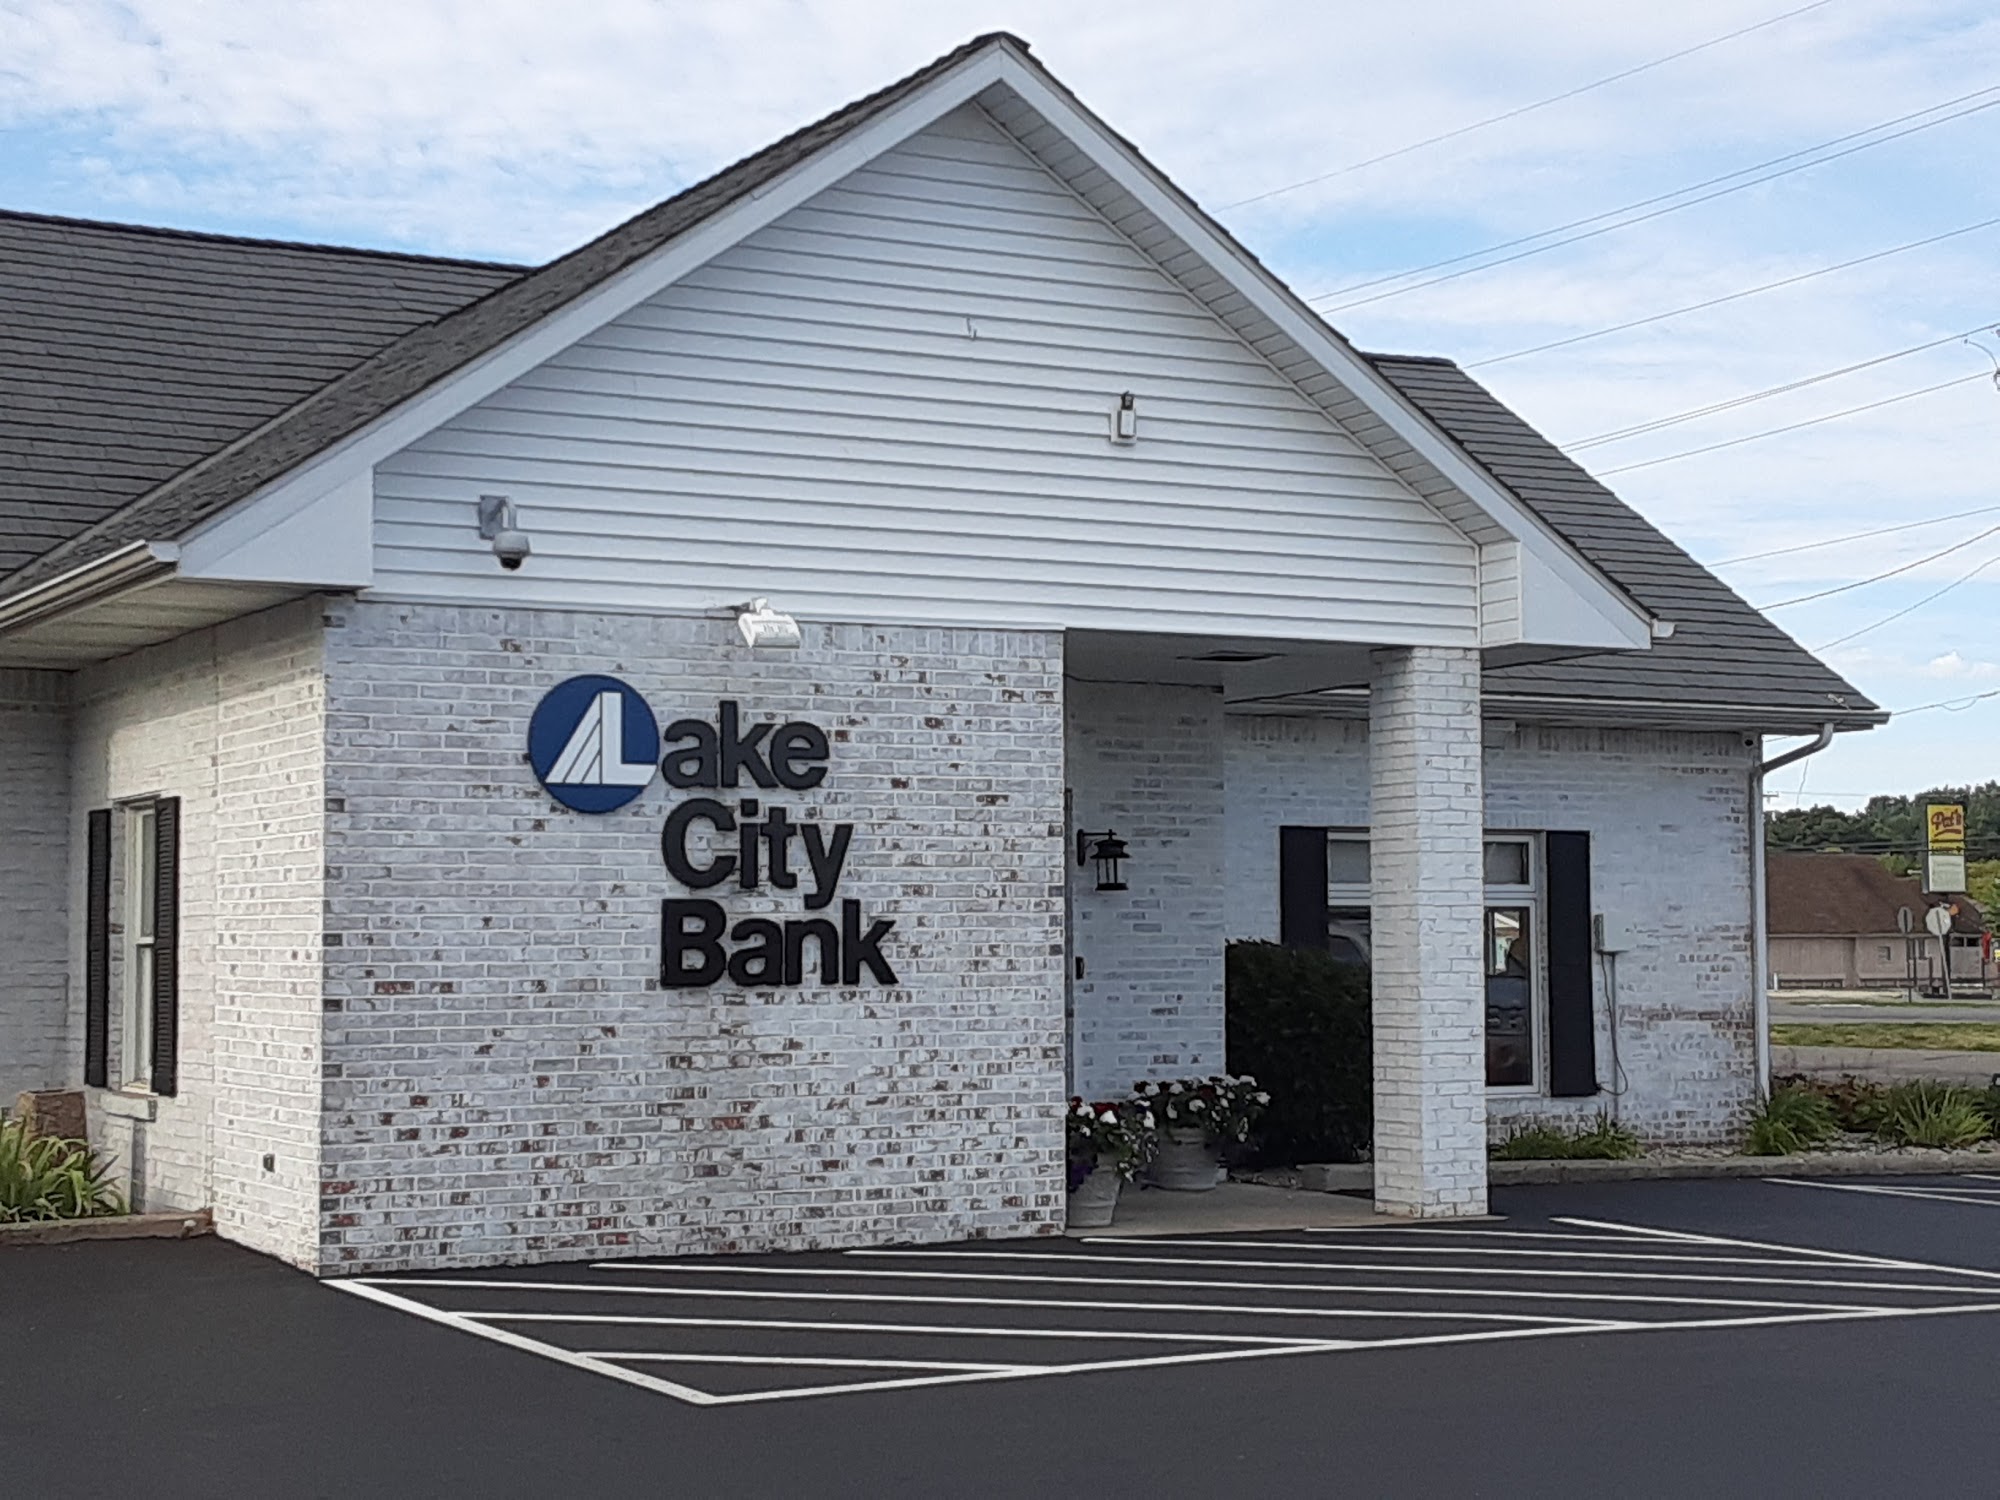 Lake City Bank